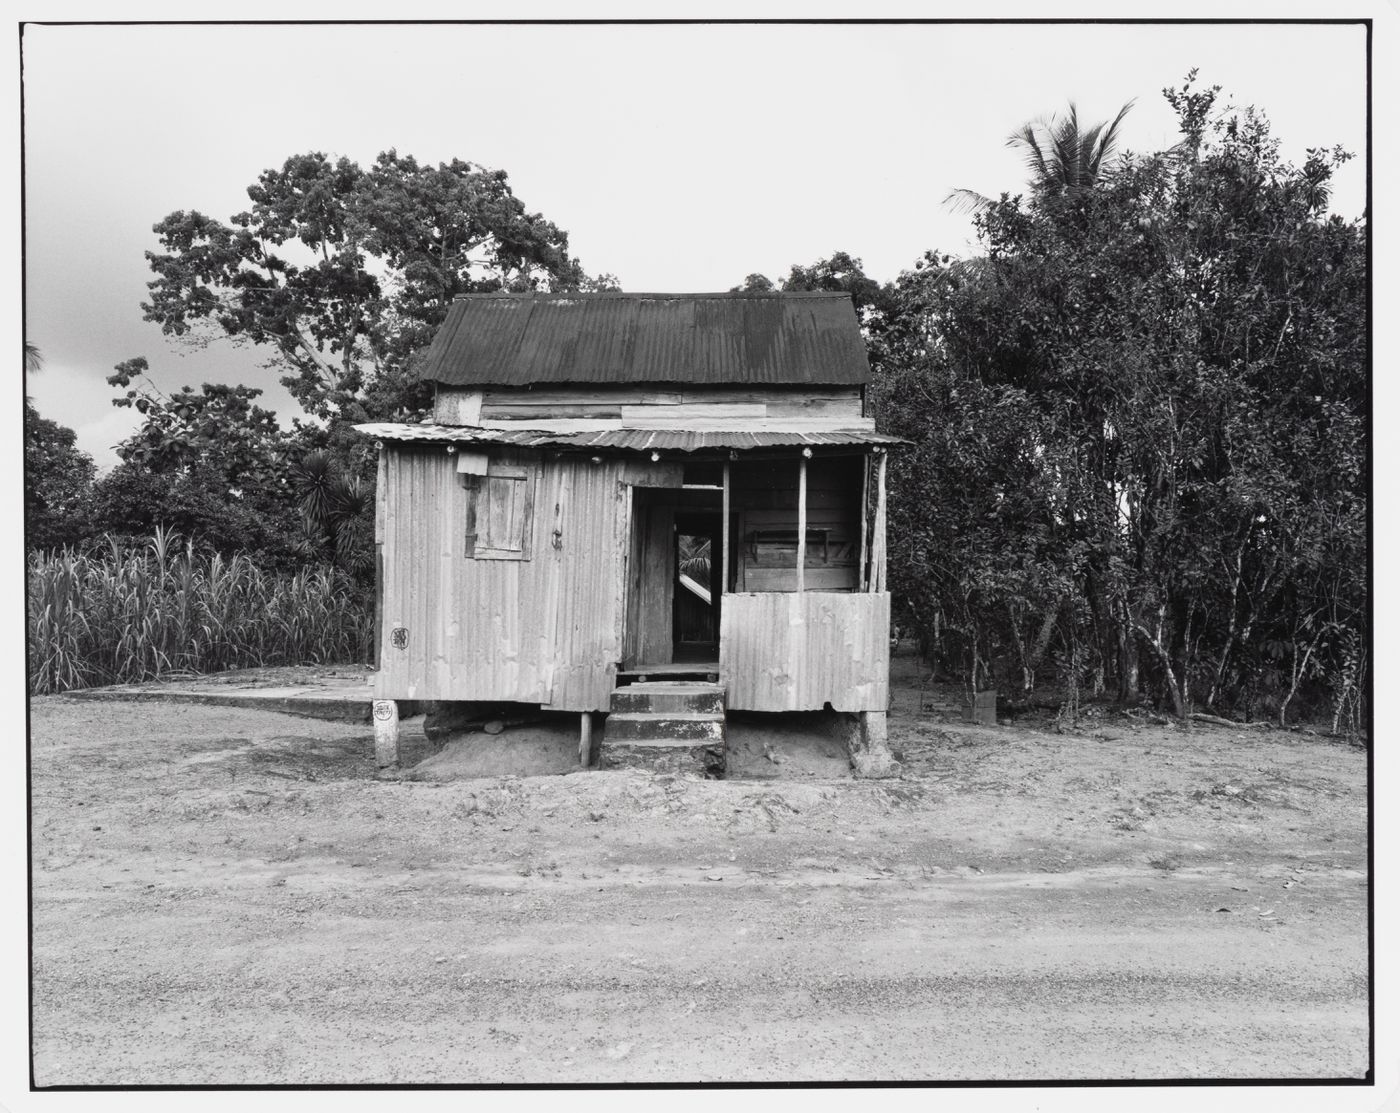 The Carter House, ca. 1980, Arthington, Liberia